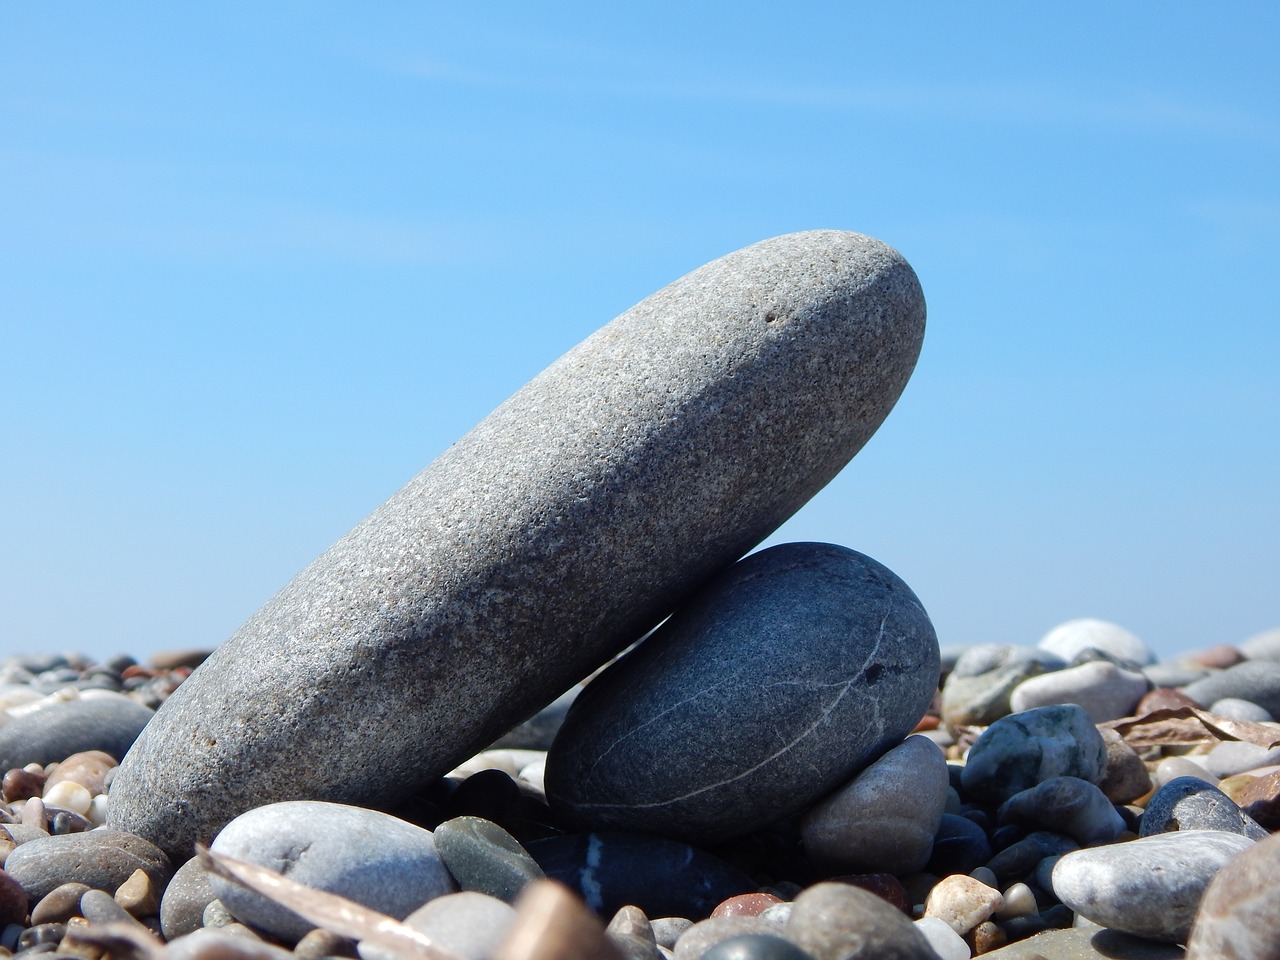 Image - stone sea pebbles stones nature